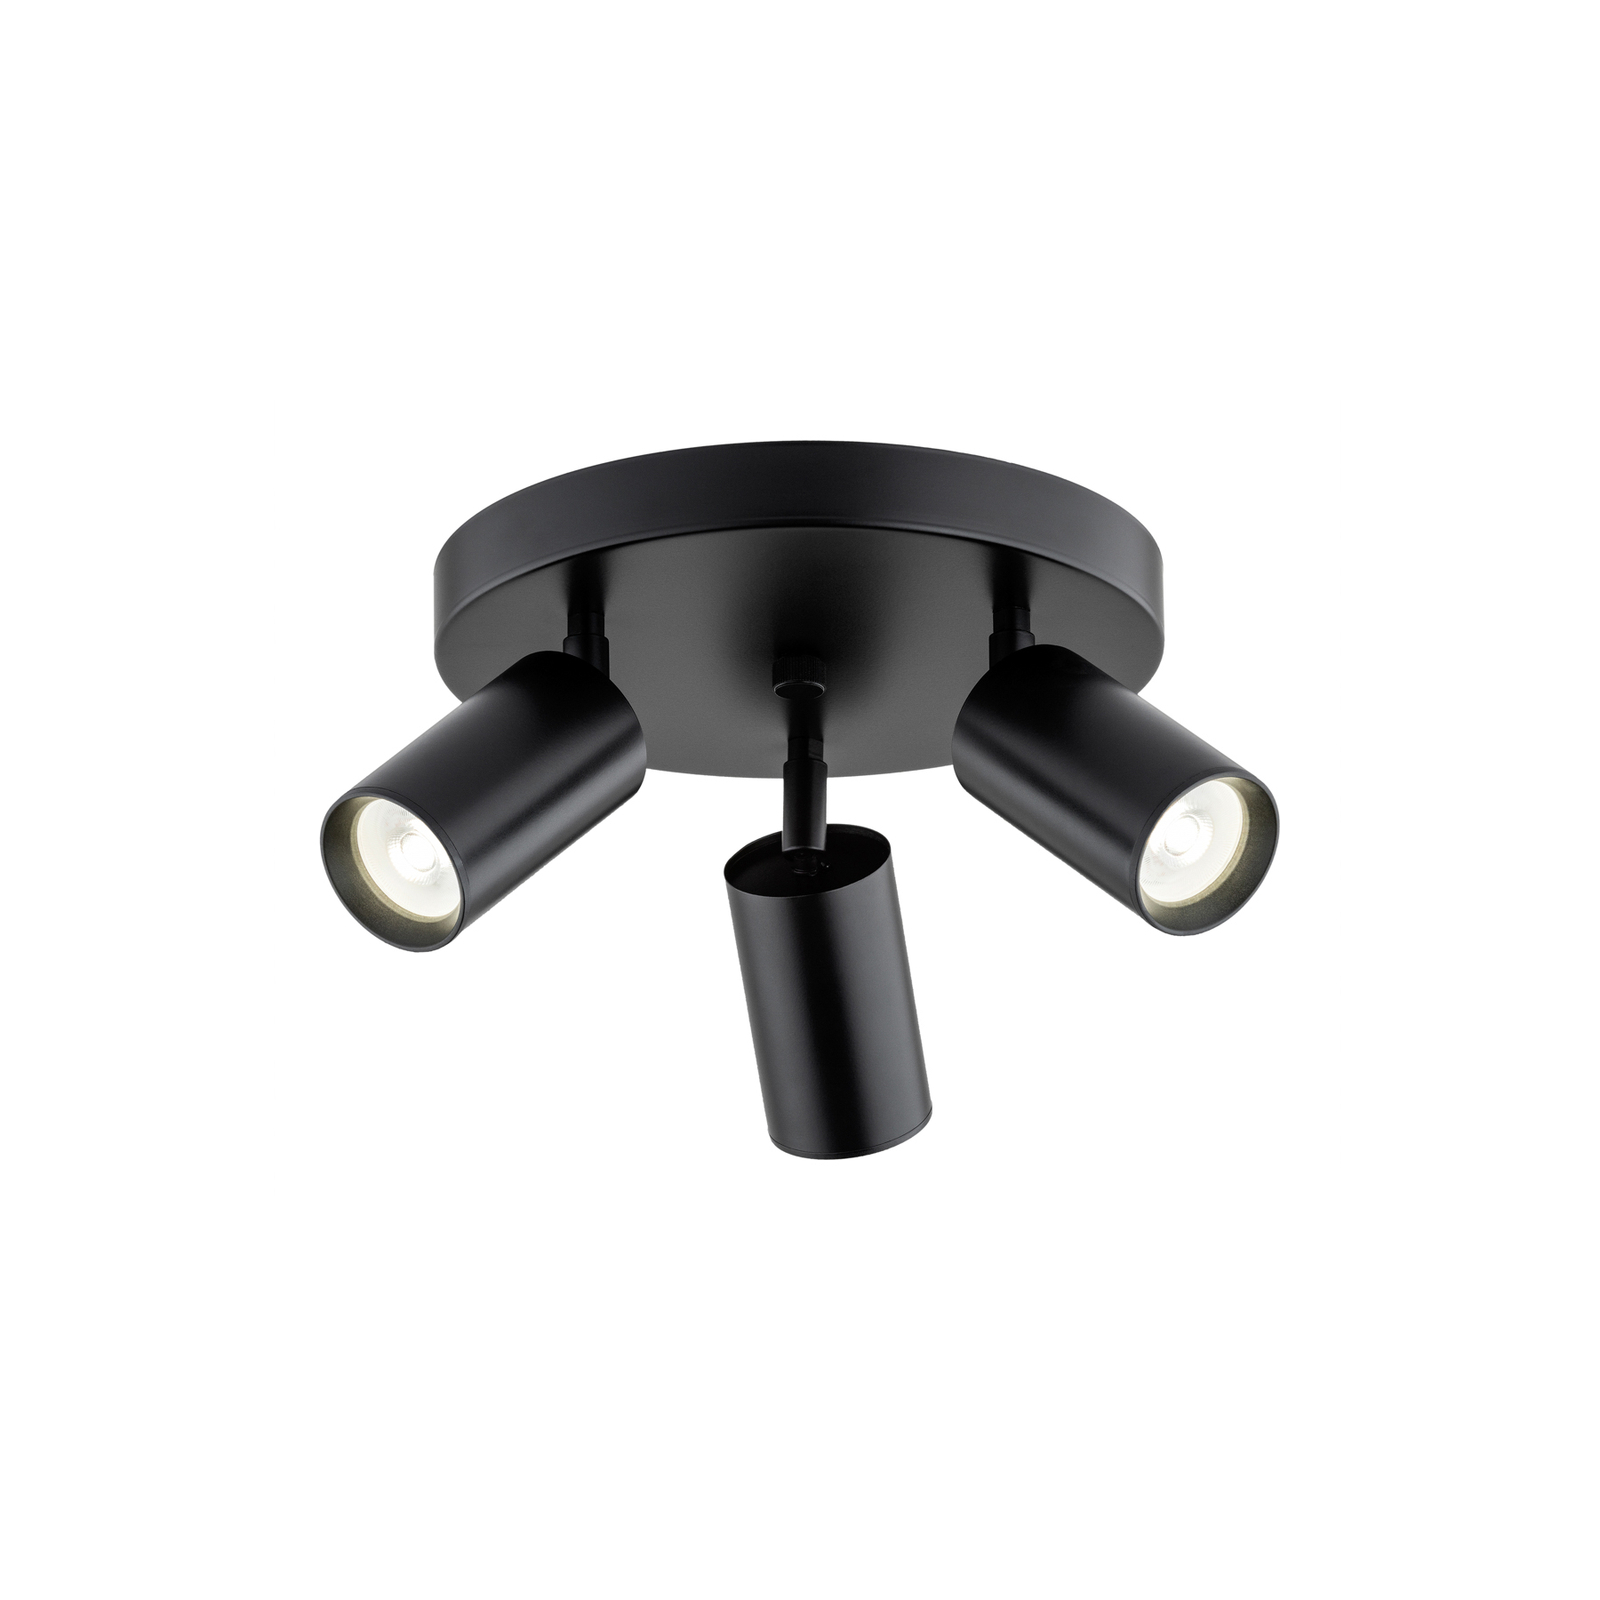 Downlight Sado black steel adjustable 3-bulb round